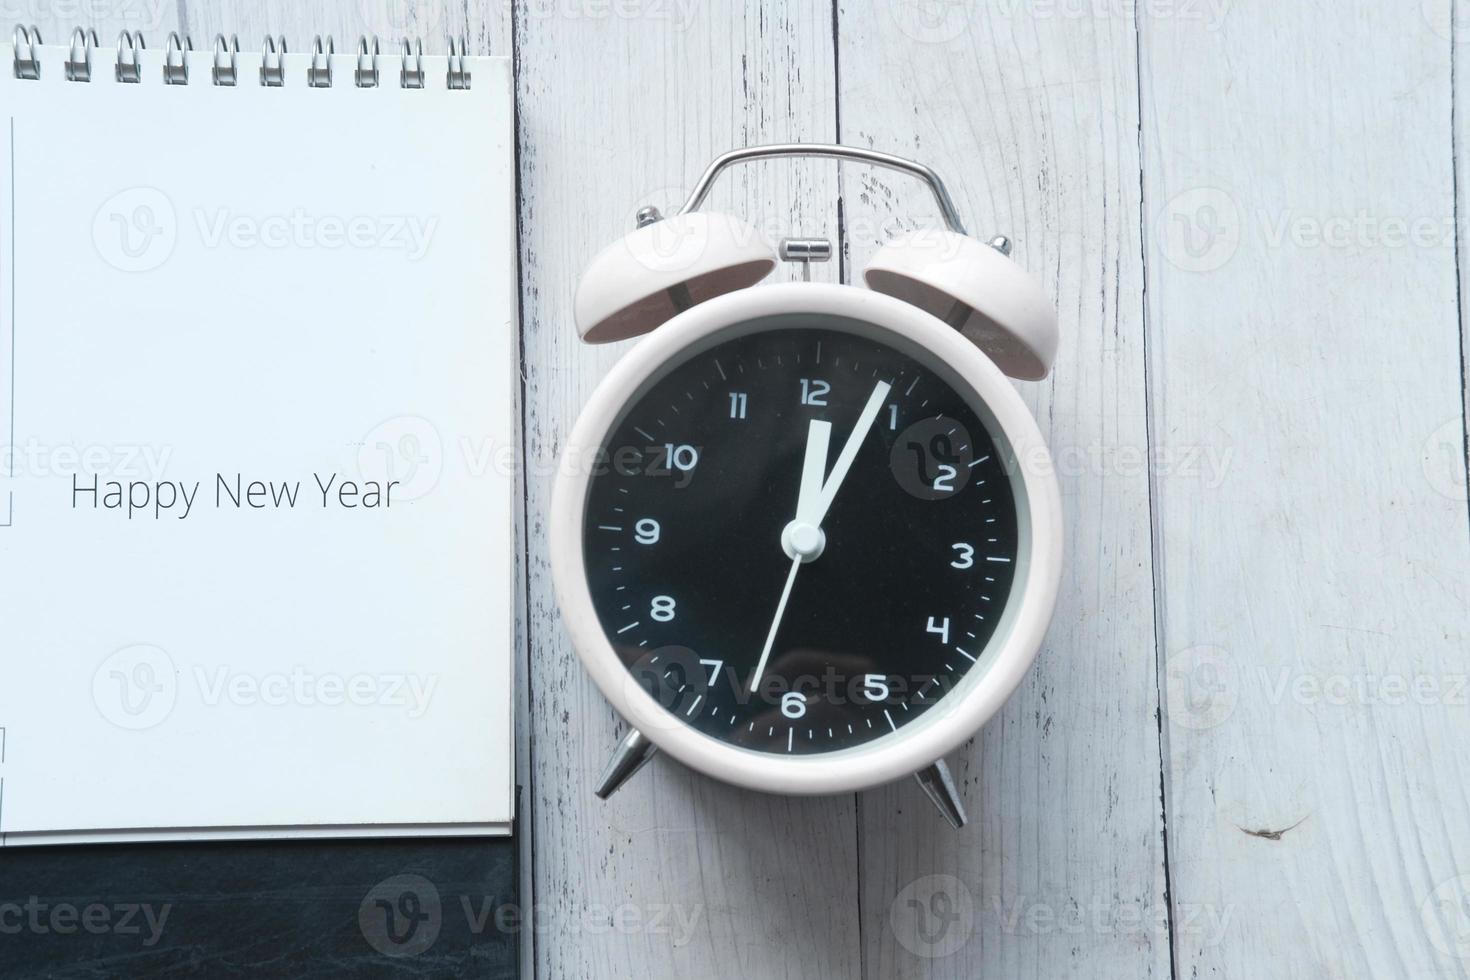 gelukkig nieuwjaar tekst op kalender met klok op tafel foto